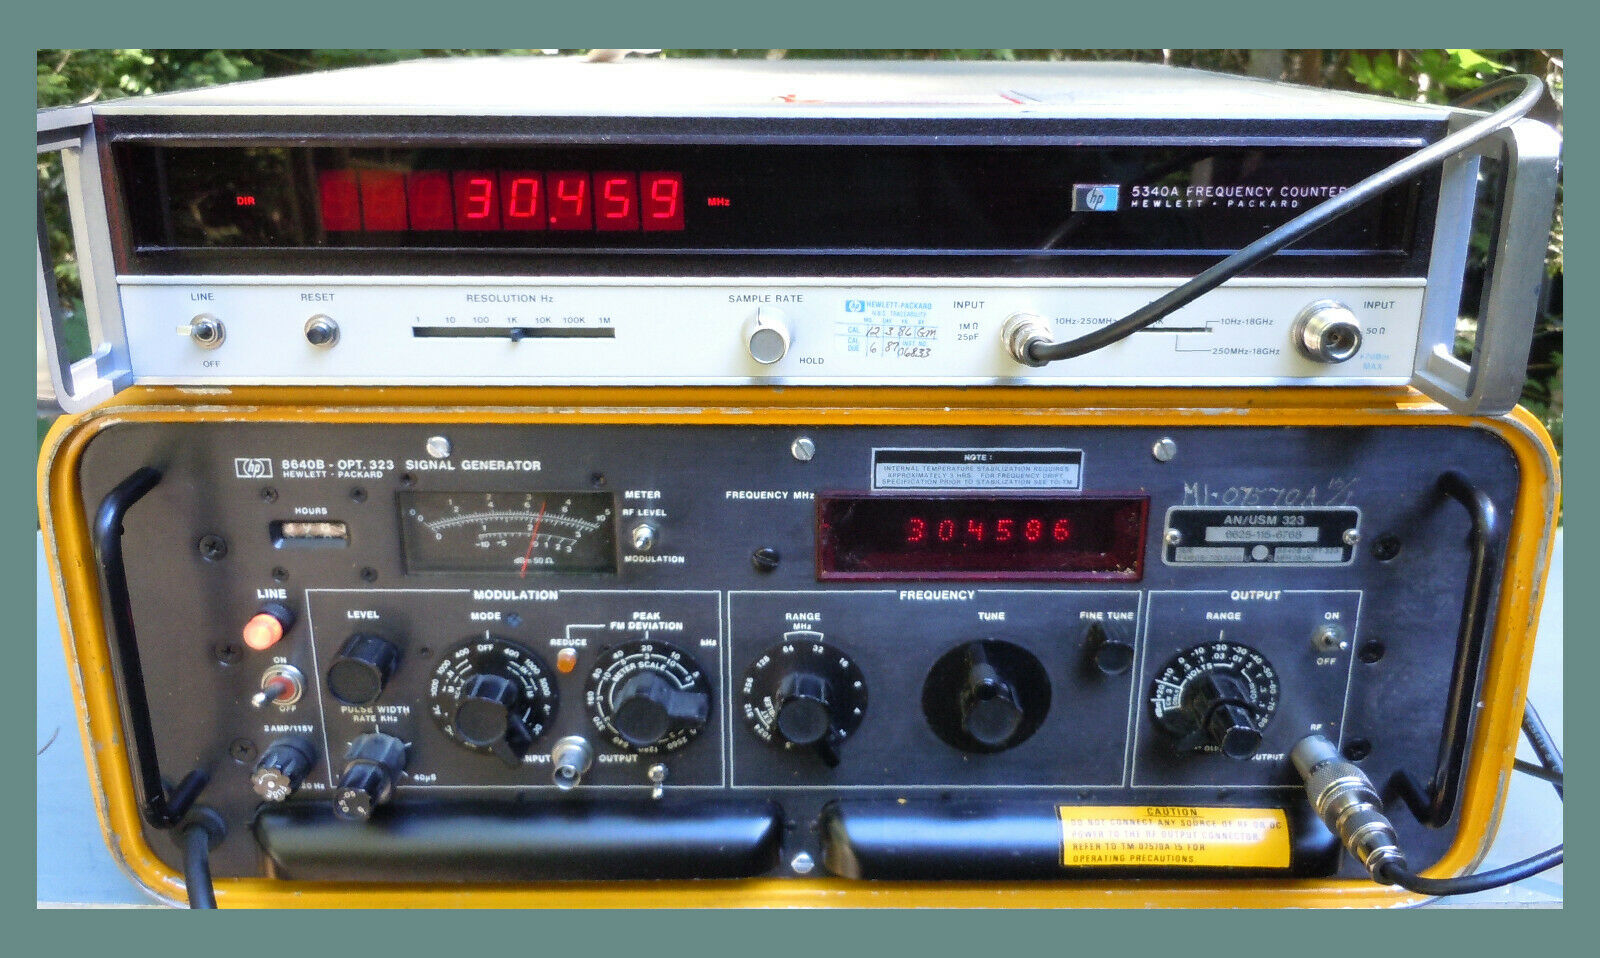 Hp 8640b Opt 323 Rf Signal Generator - Ruggedized Military Version Of A Classic